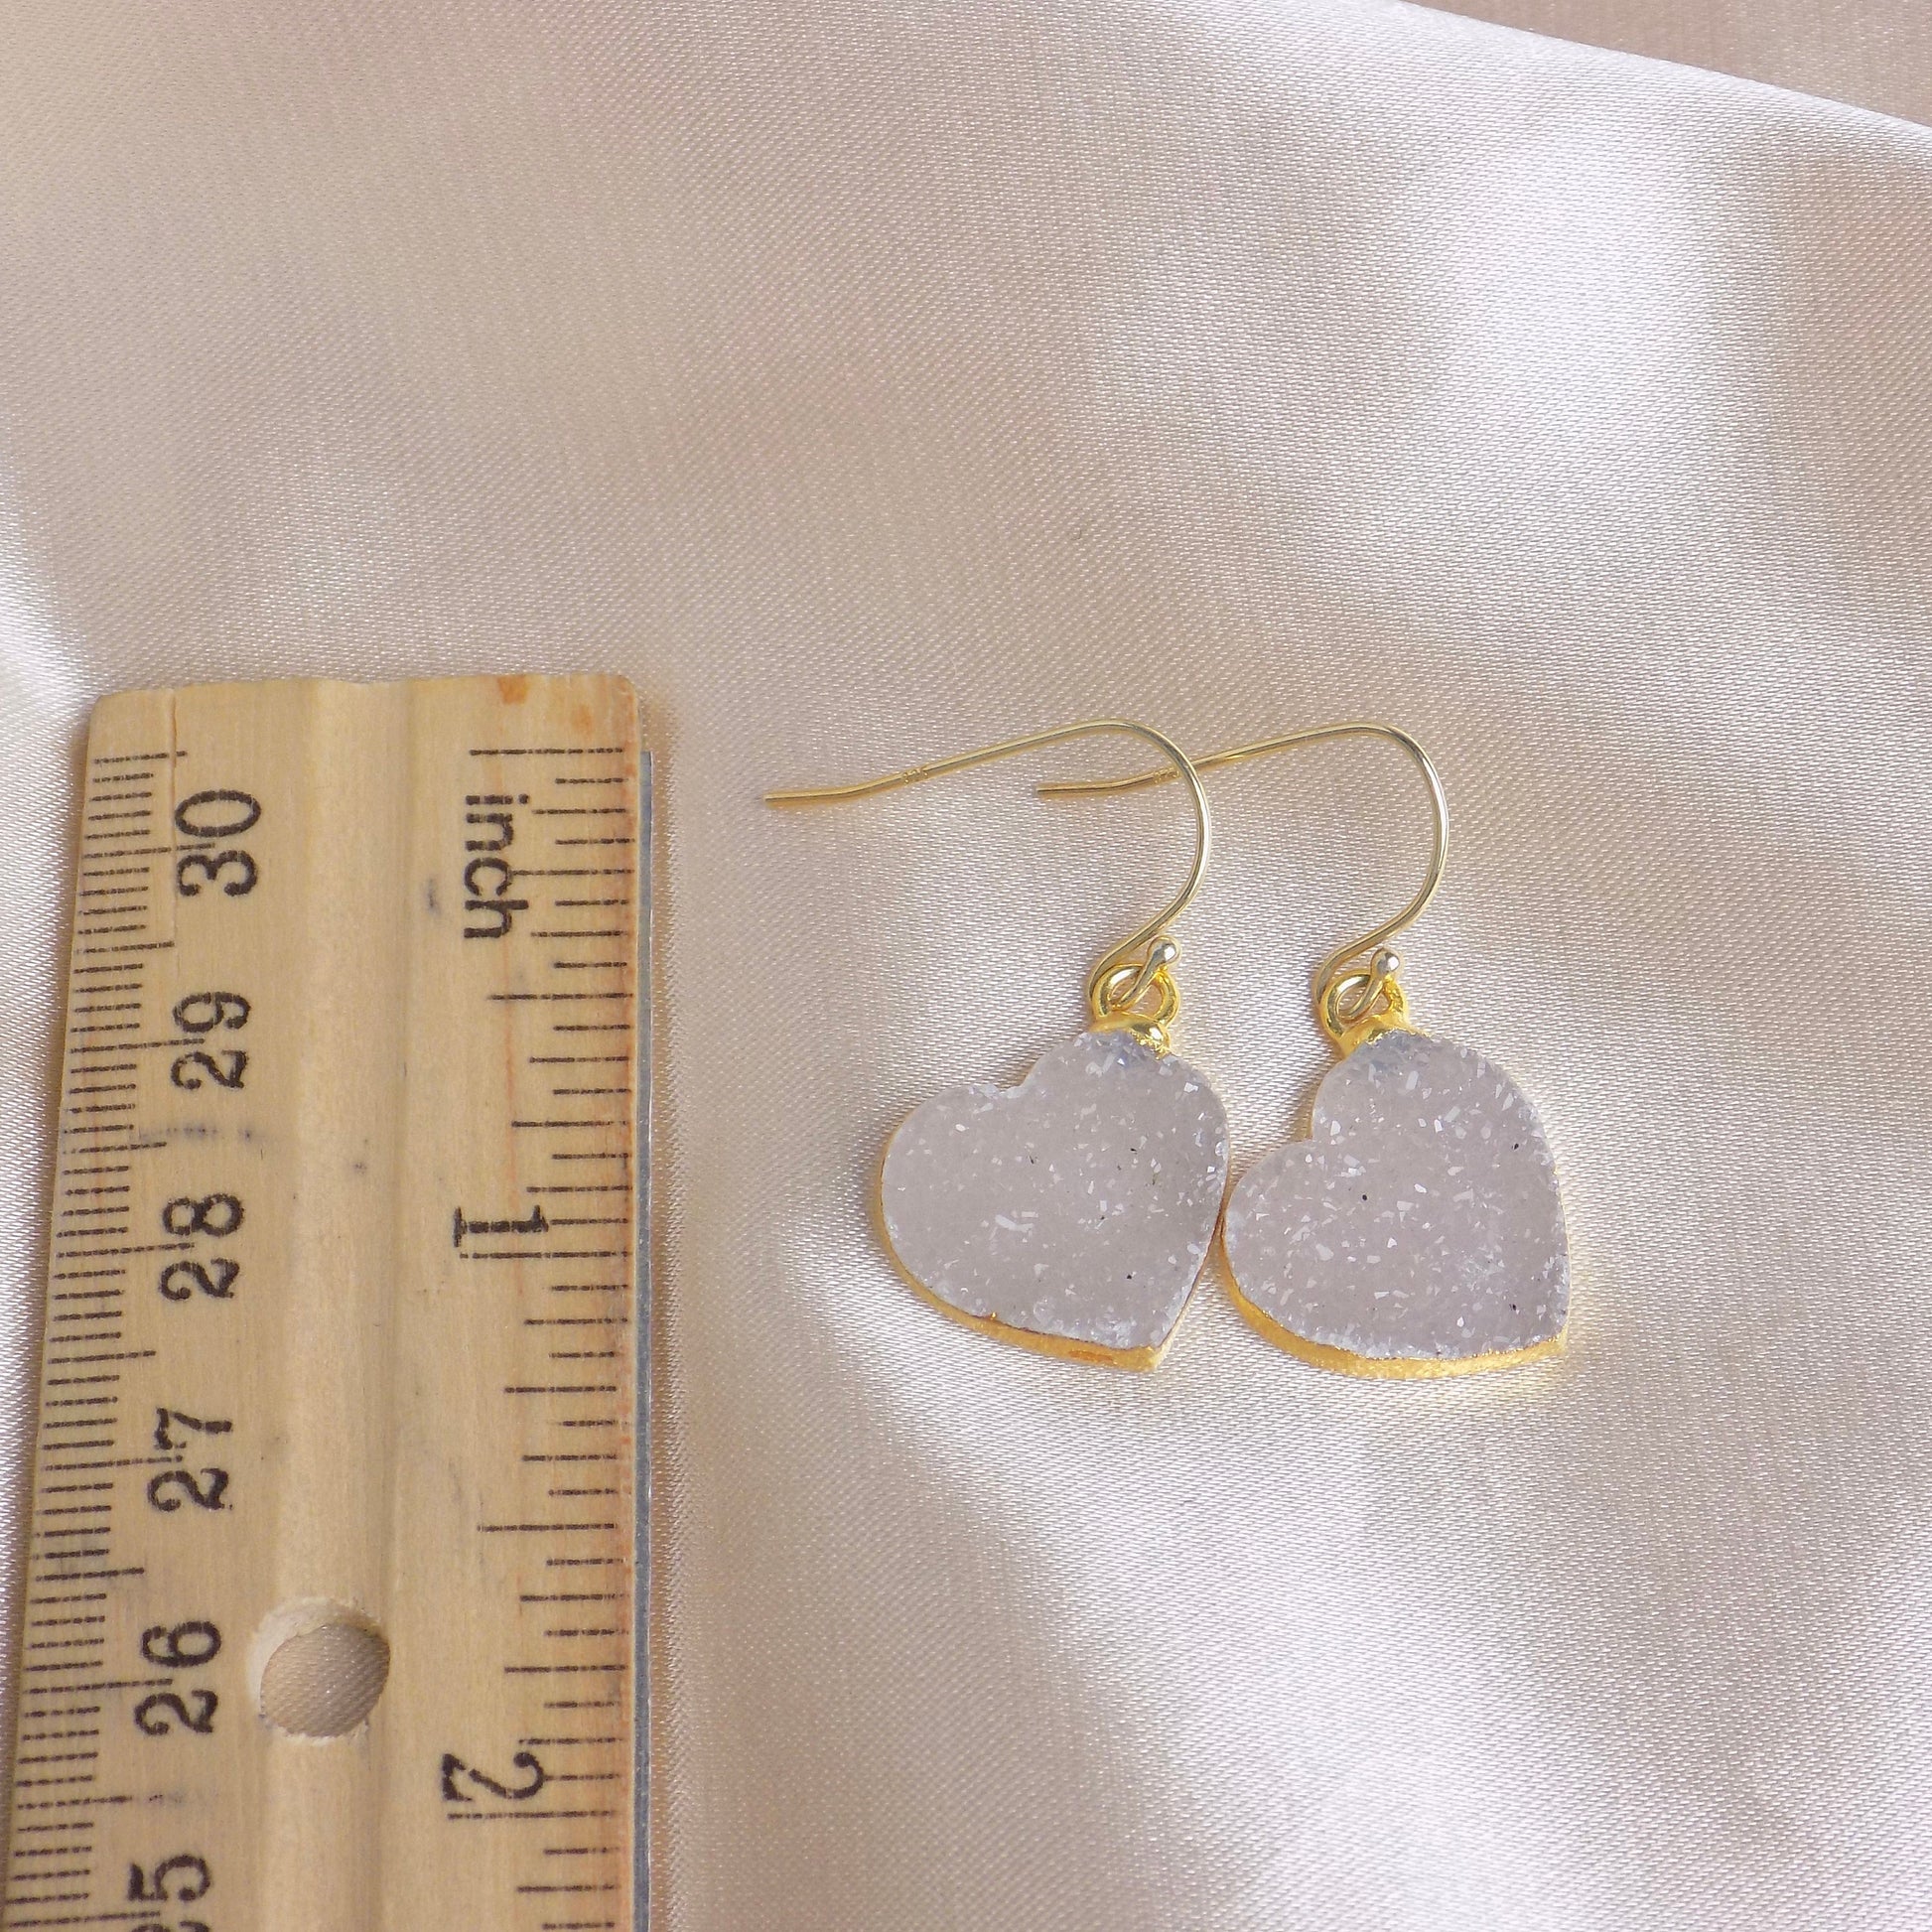 Heart Druzy Earrings Dangle Gold, Sparkly Gemstone Drop, Christmas Gift Women, M6-619